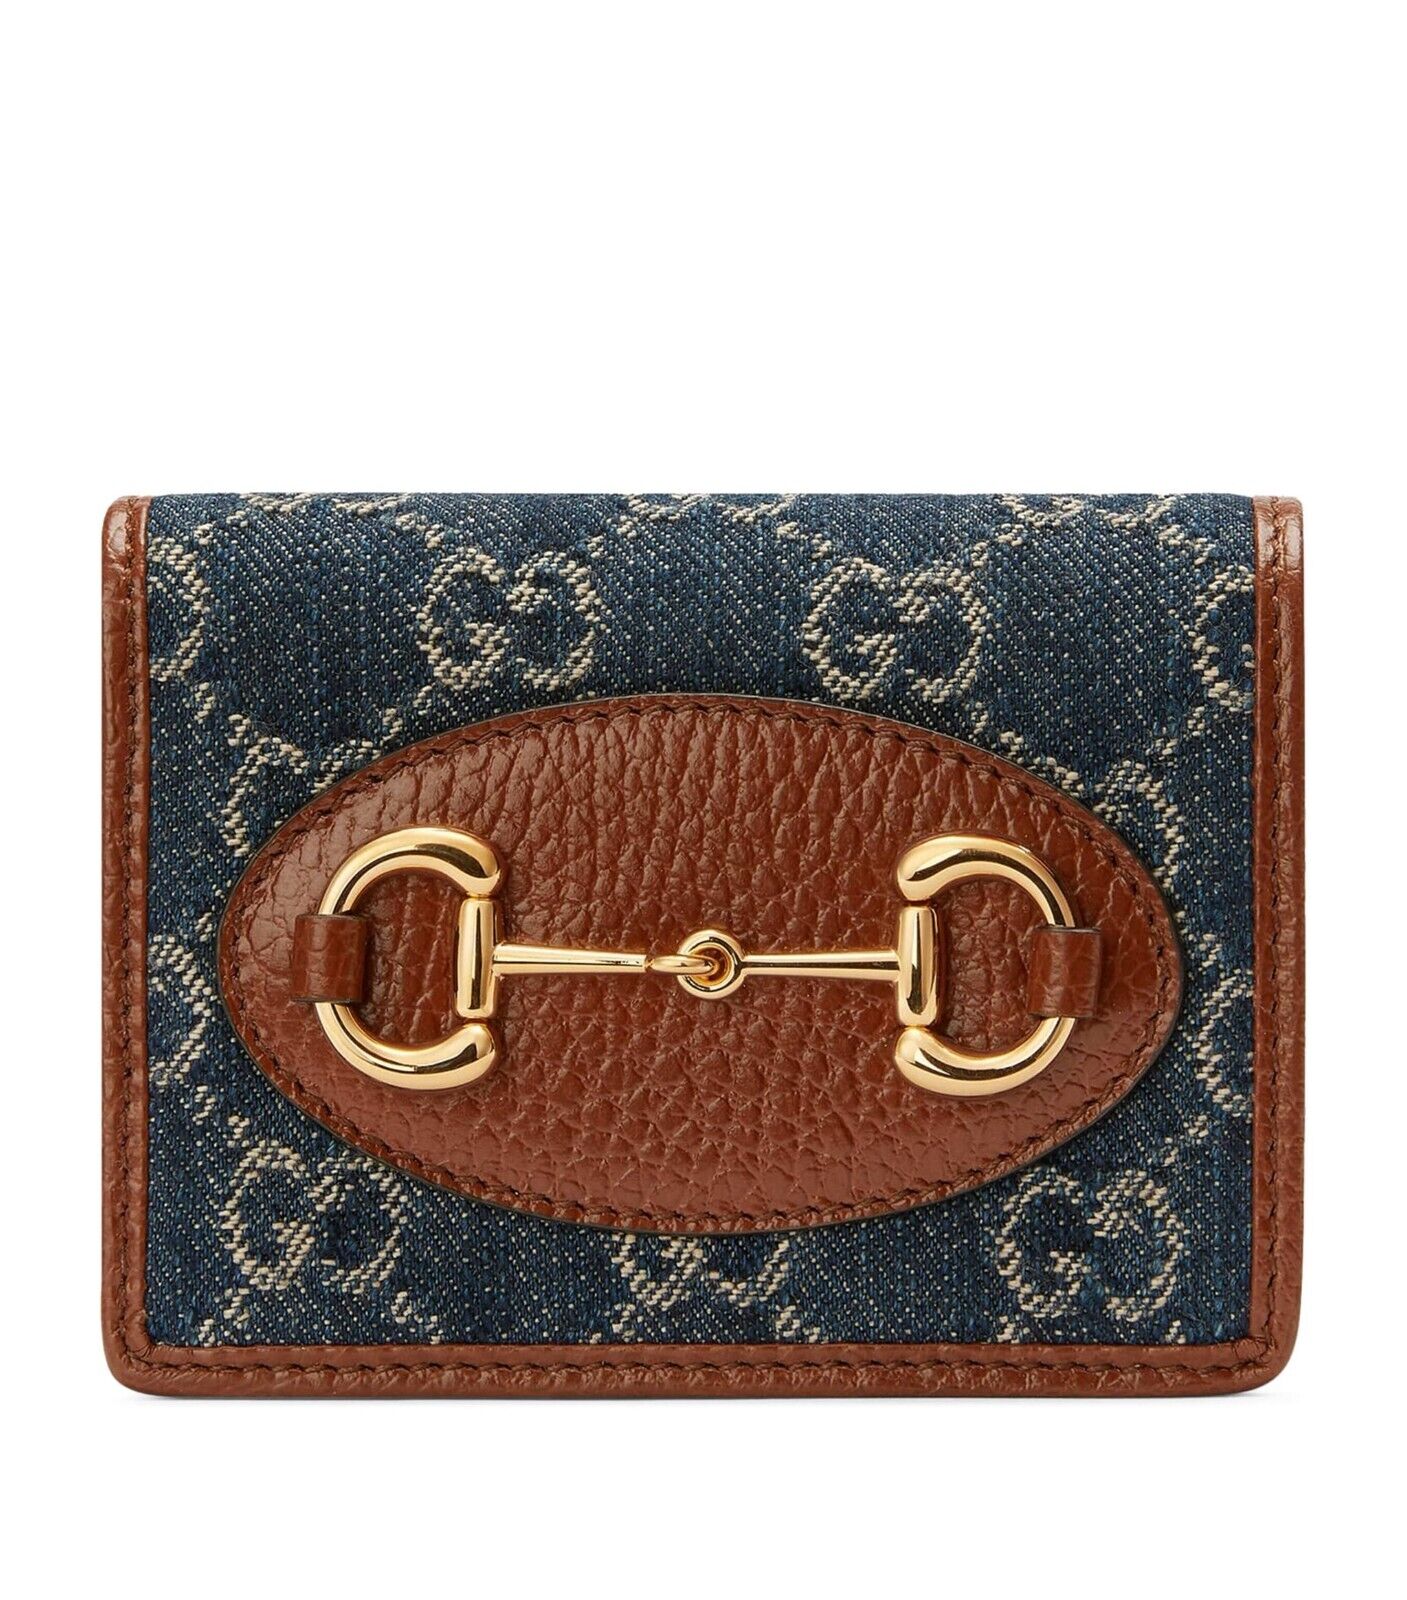 GUCCI Horsebit 1955 leather wallet